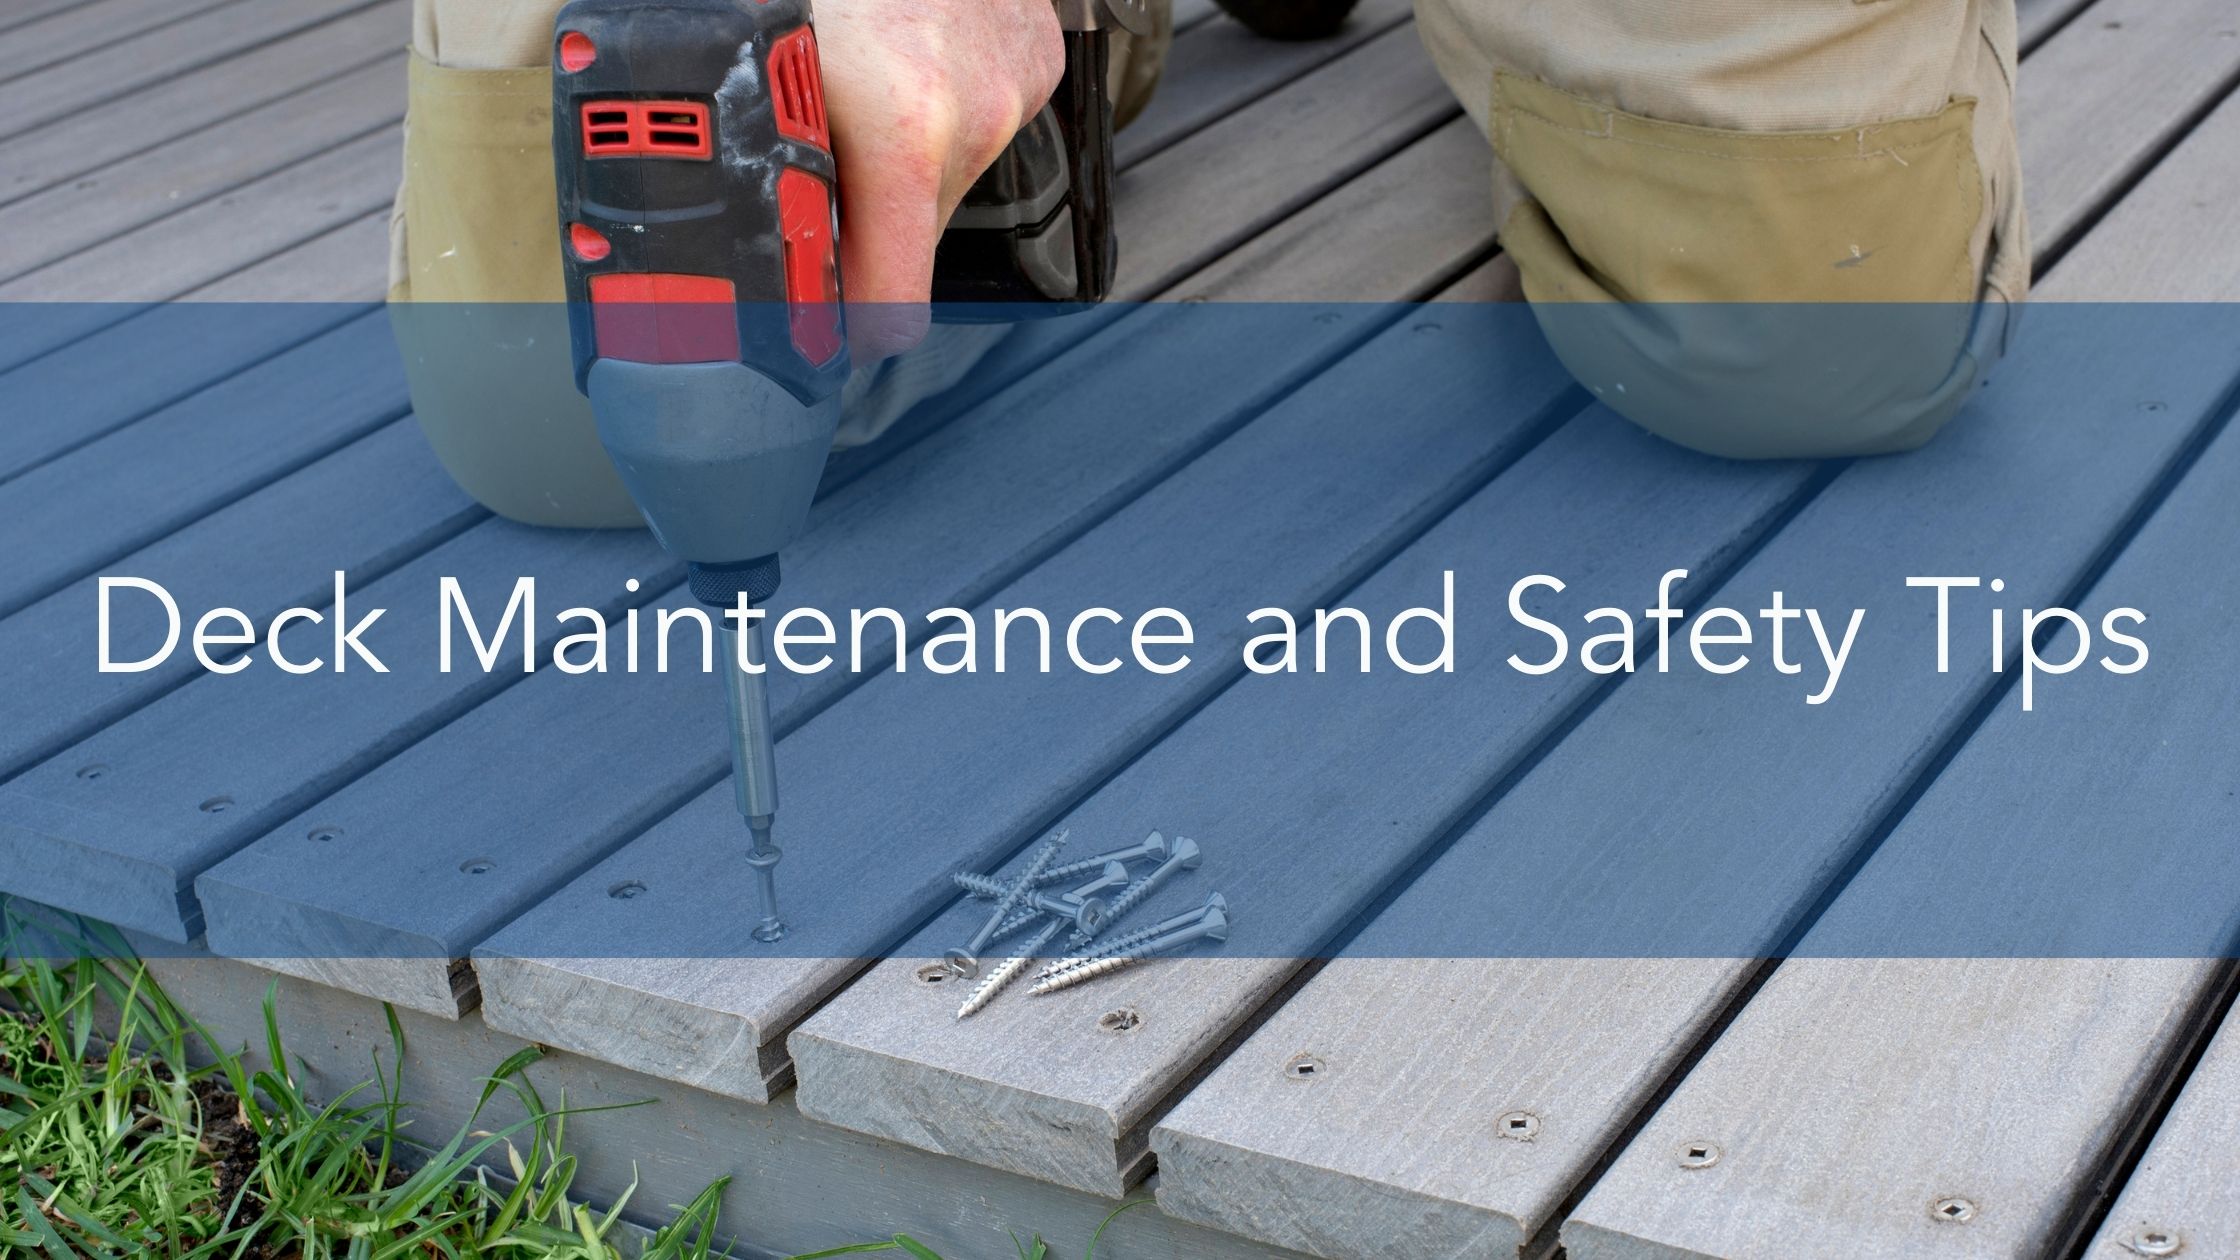 https://handymanconnection.com/wp-content/uploads/2022/06/Deck-Maintenance-and-Safety-Tips.jpg